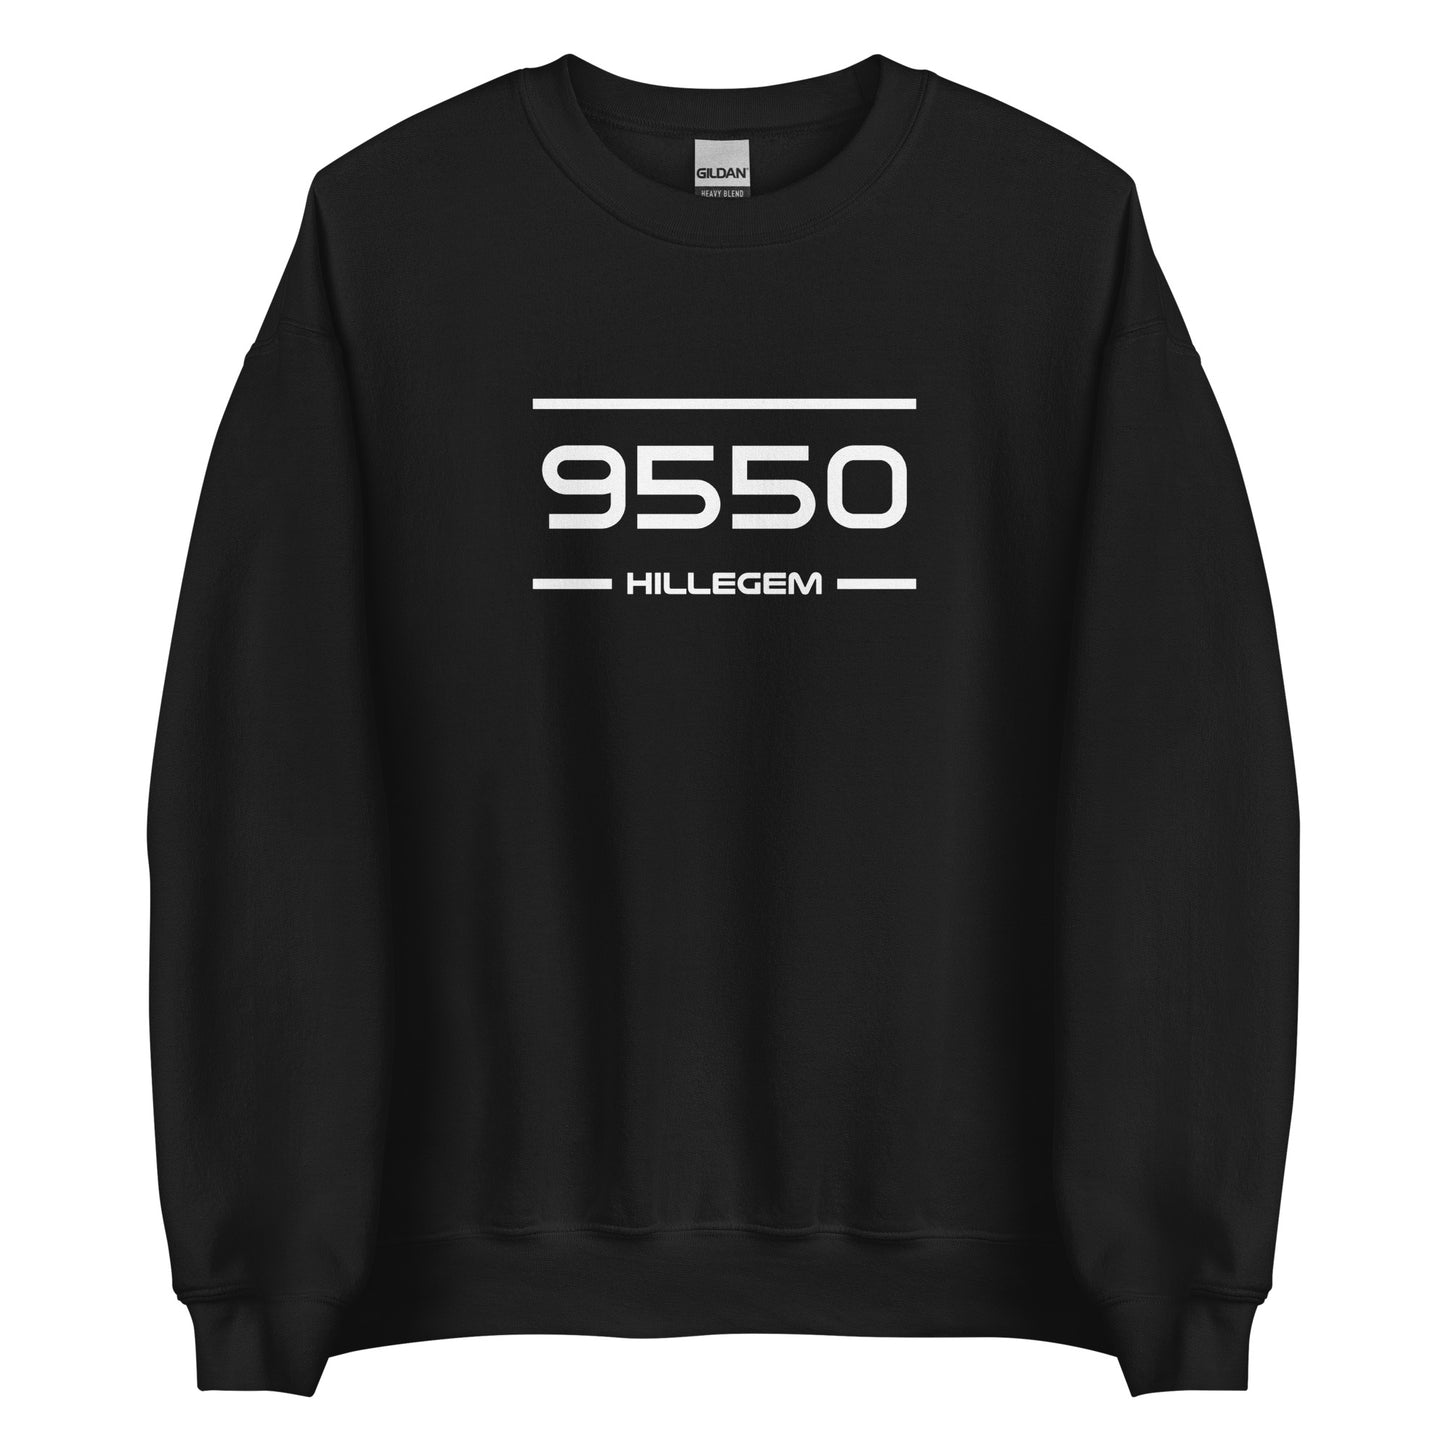 Sweater - 9550 - Hillegem (M/V)